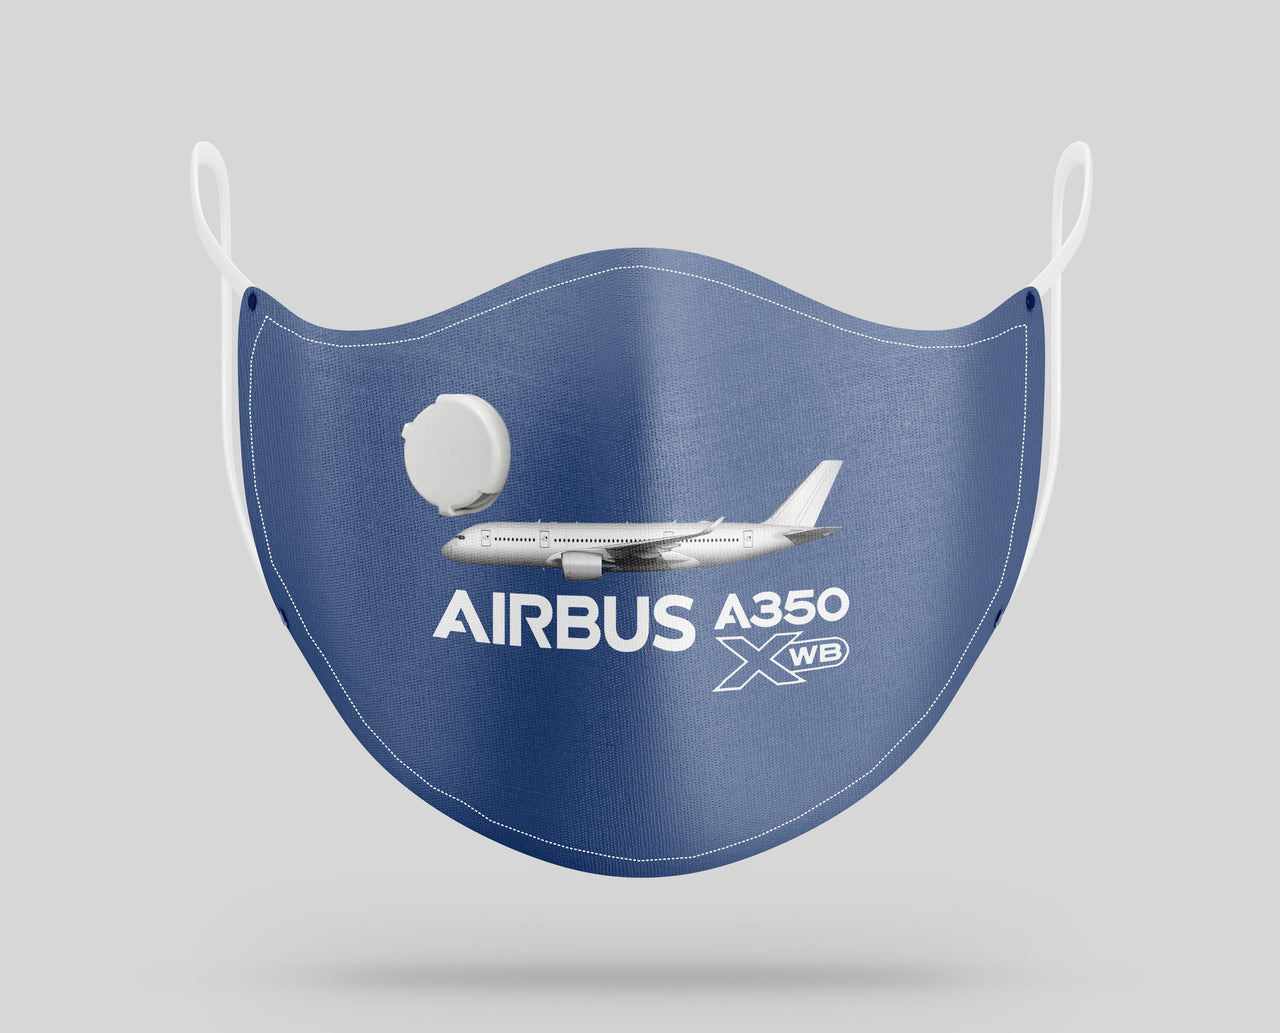 The Airbus A350 WXB Designed Face Masks